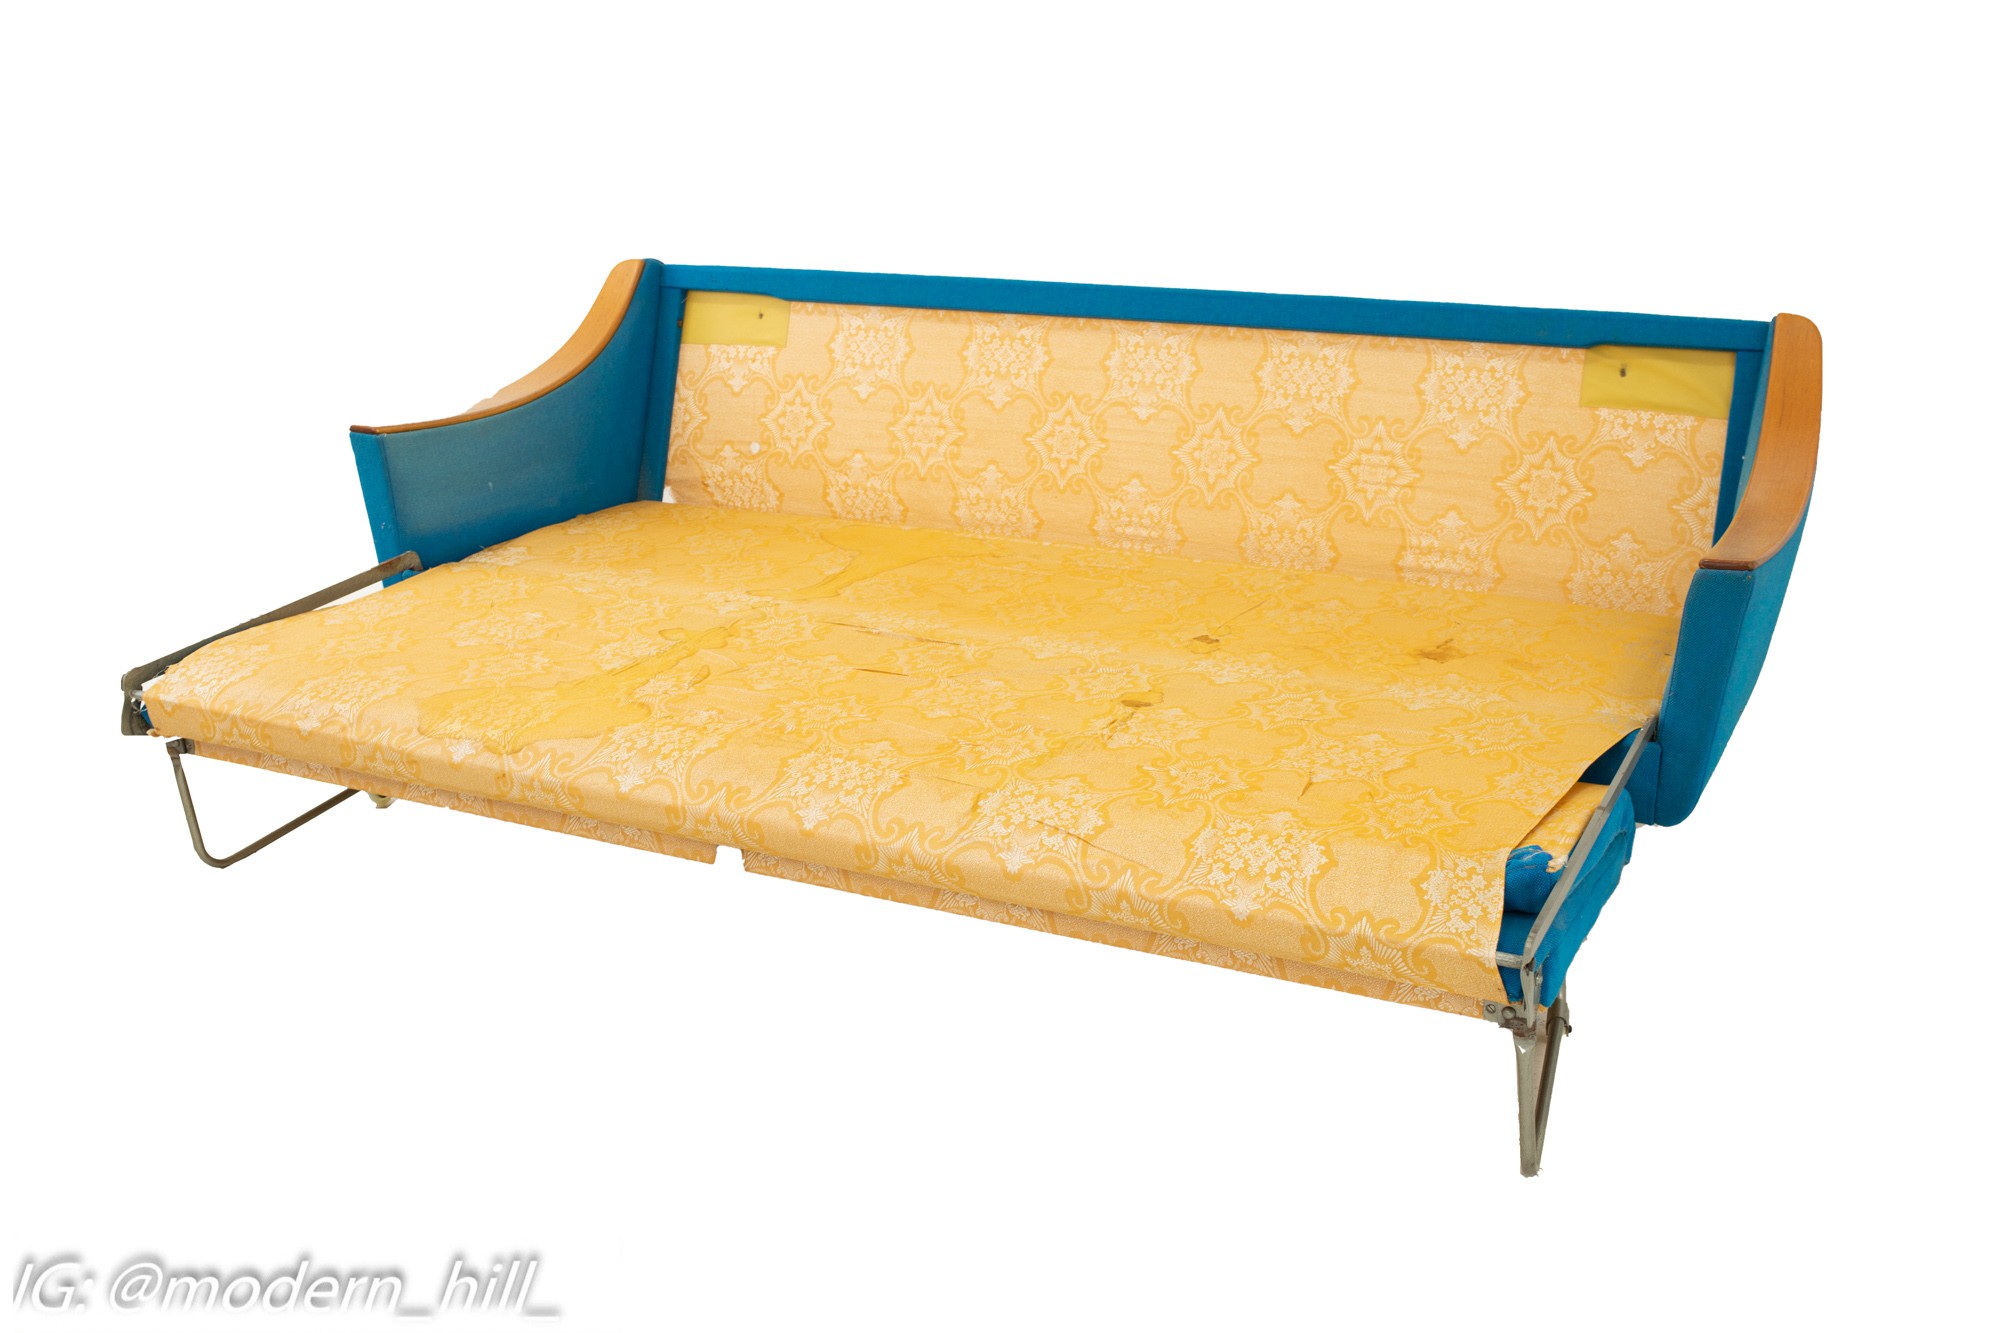 Dux Style Mid Century Teak & Teal Sleeper Sofa